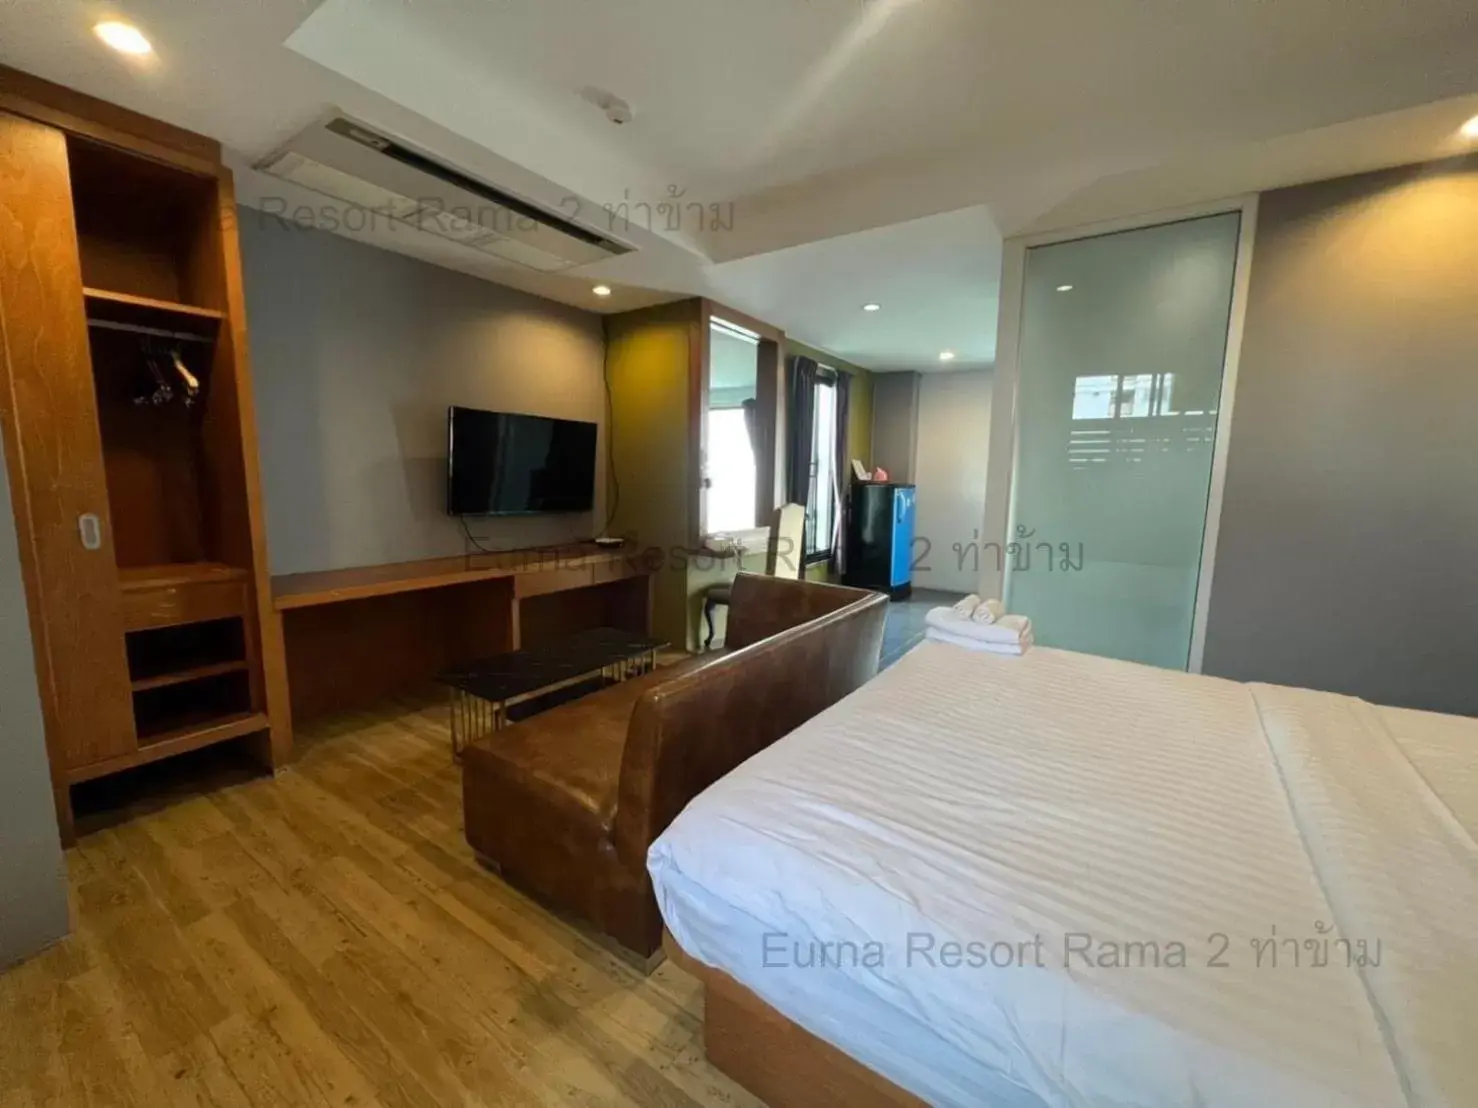 Bedroom in Eurna Resort Hotel